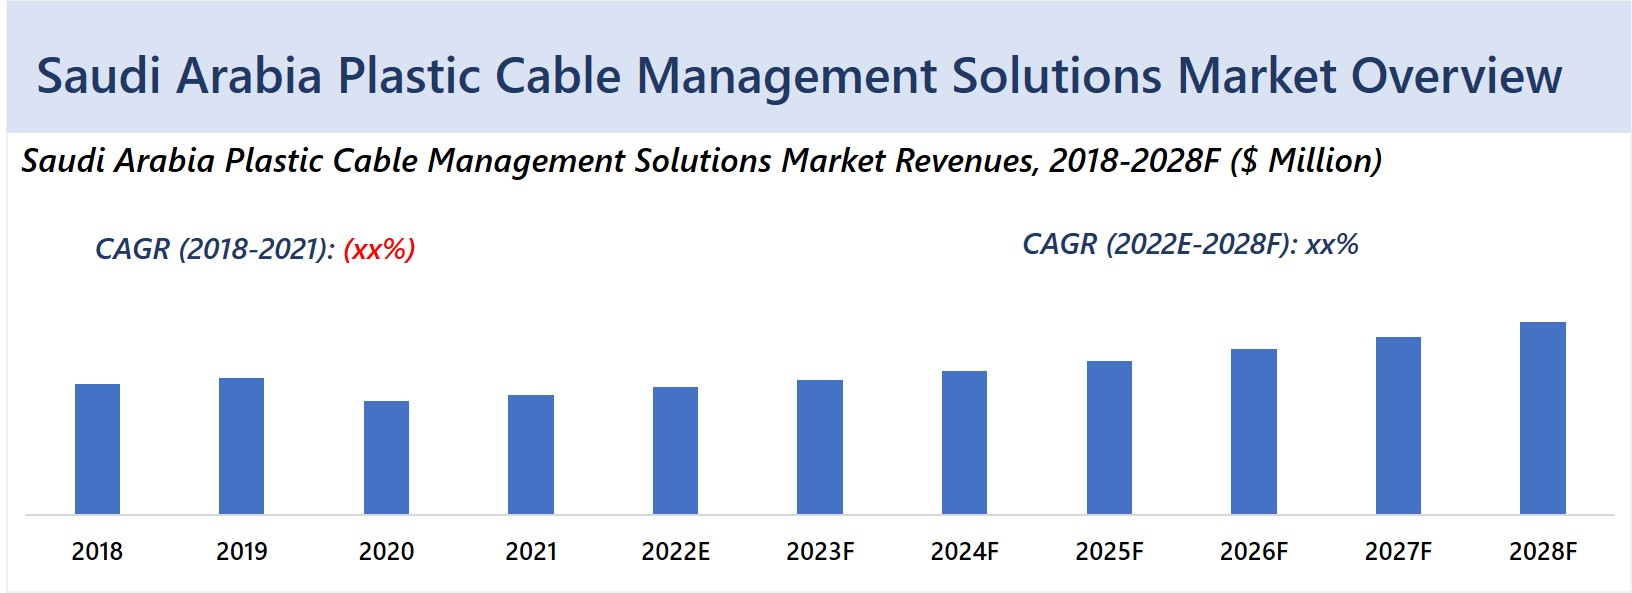 Saudi Arabia Plastic Cable Management Solutions Market